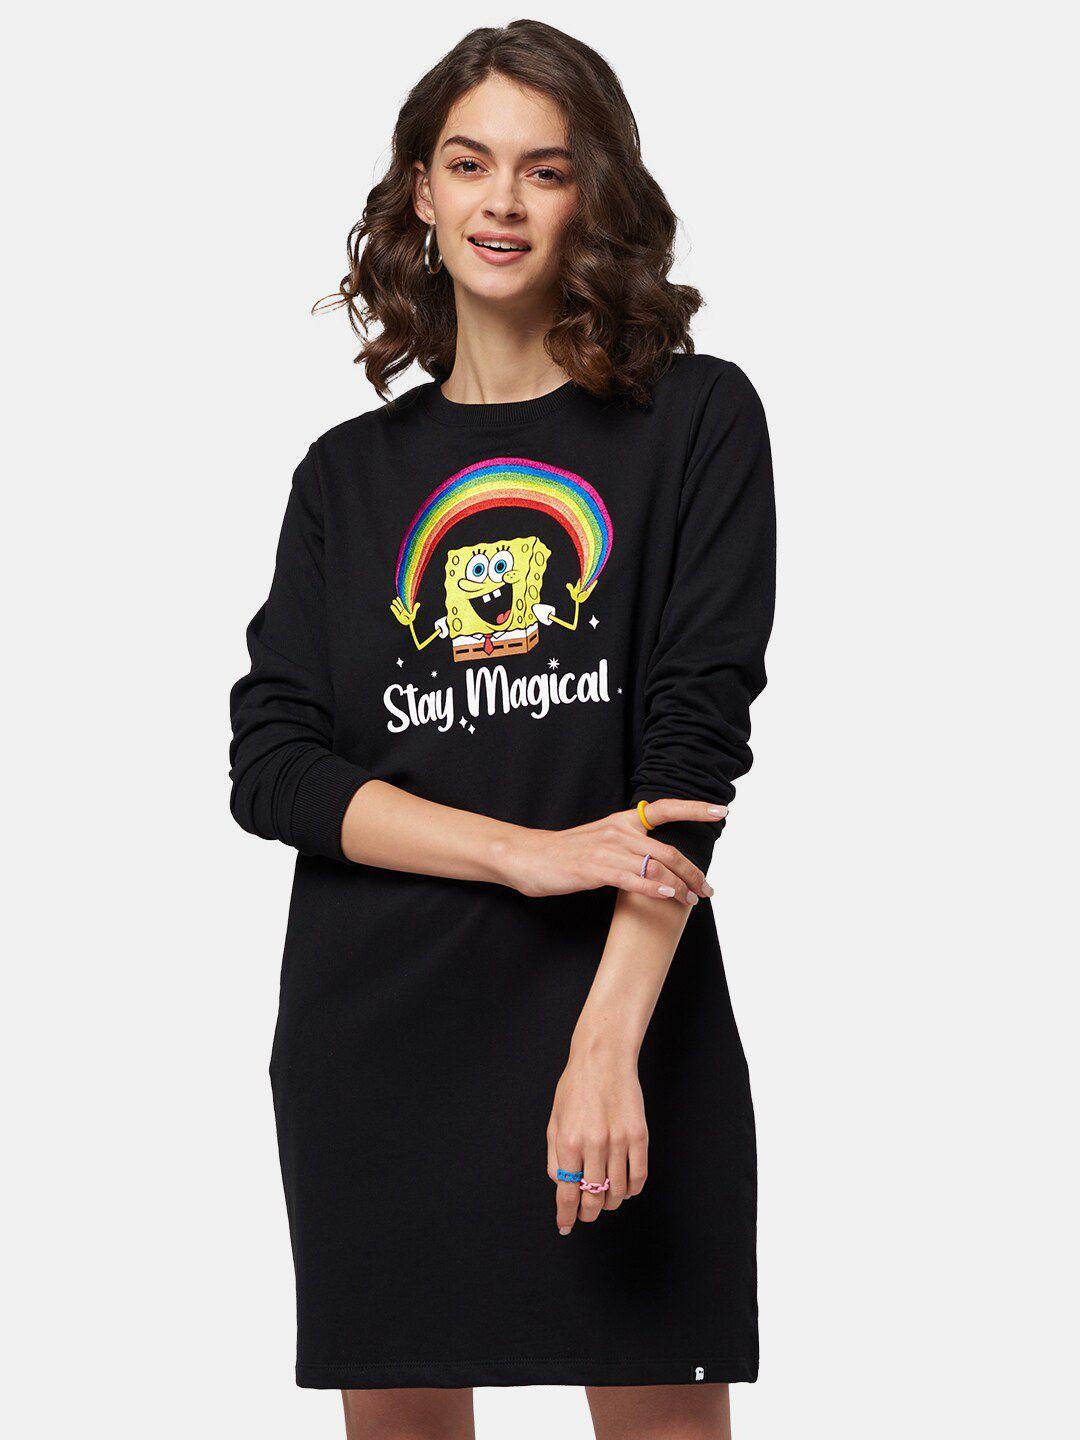 the souled store spongebob printed long sleeves t-shirt dress